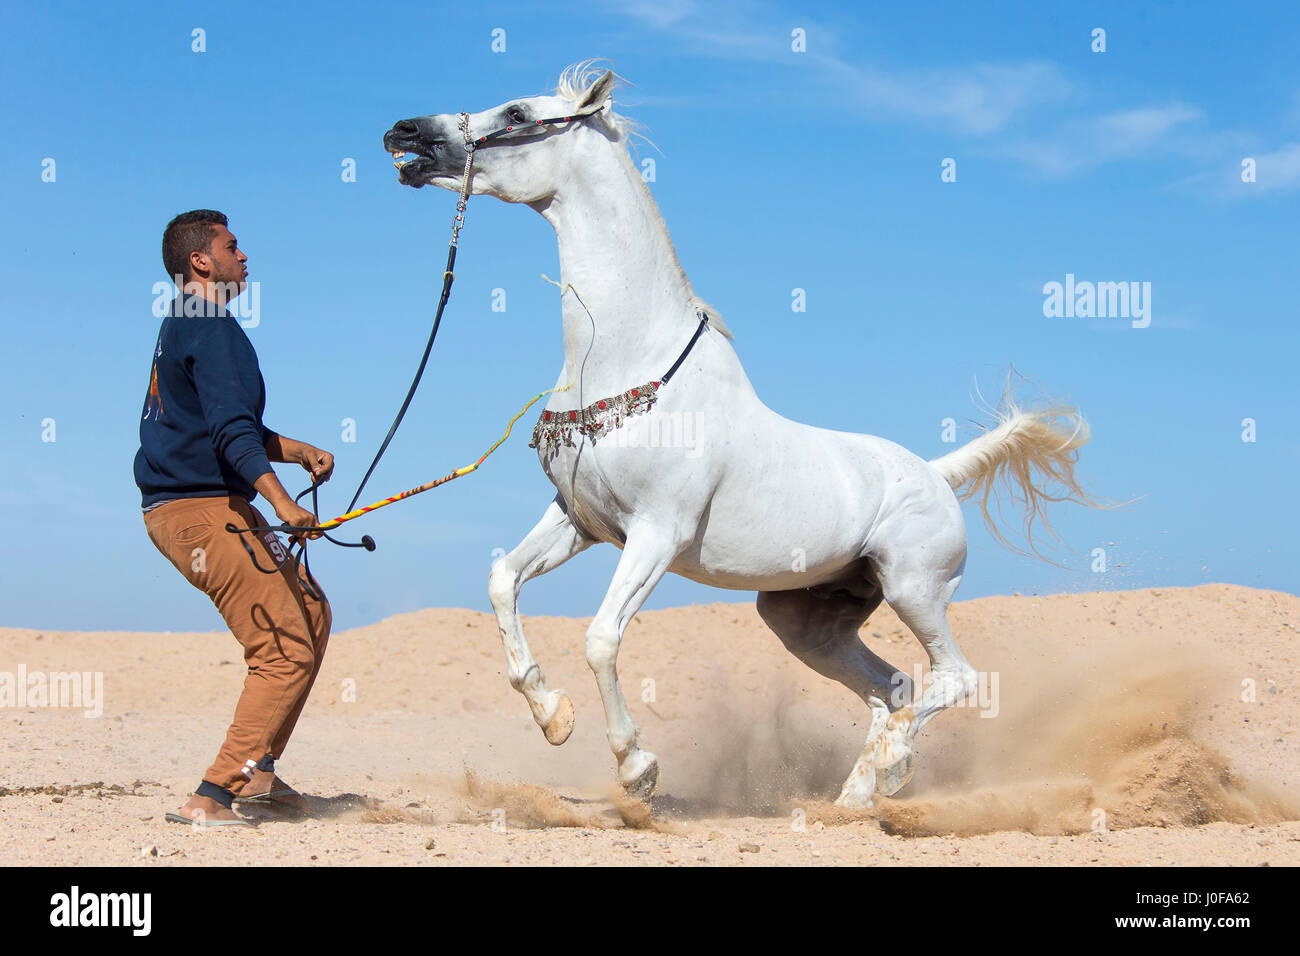 Arabian Horse Gray Stallion Biting Itself Self Harm Tunisia Stock Photo Alamy